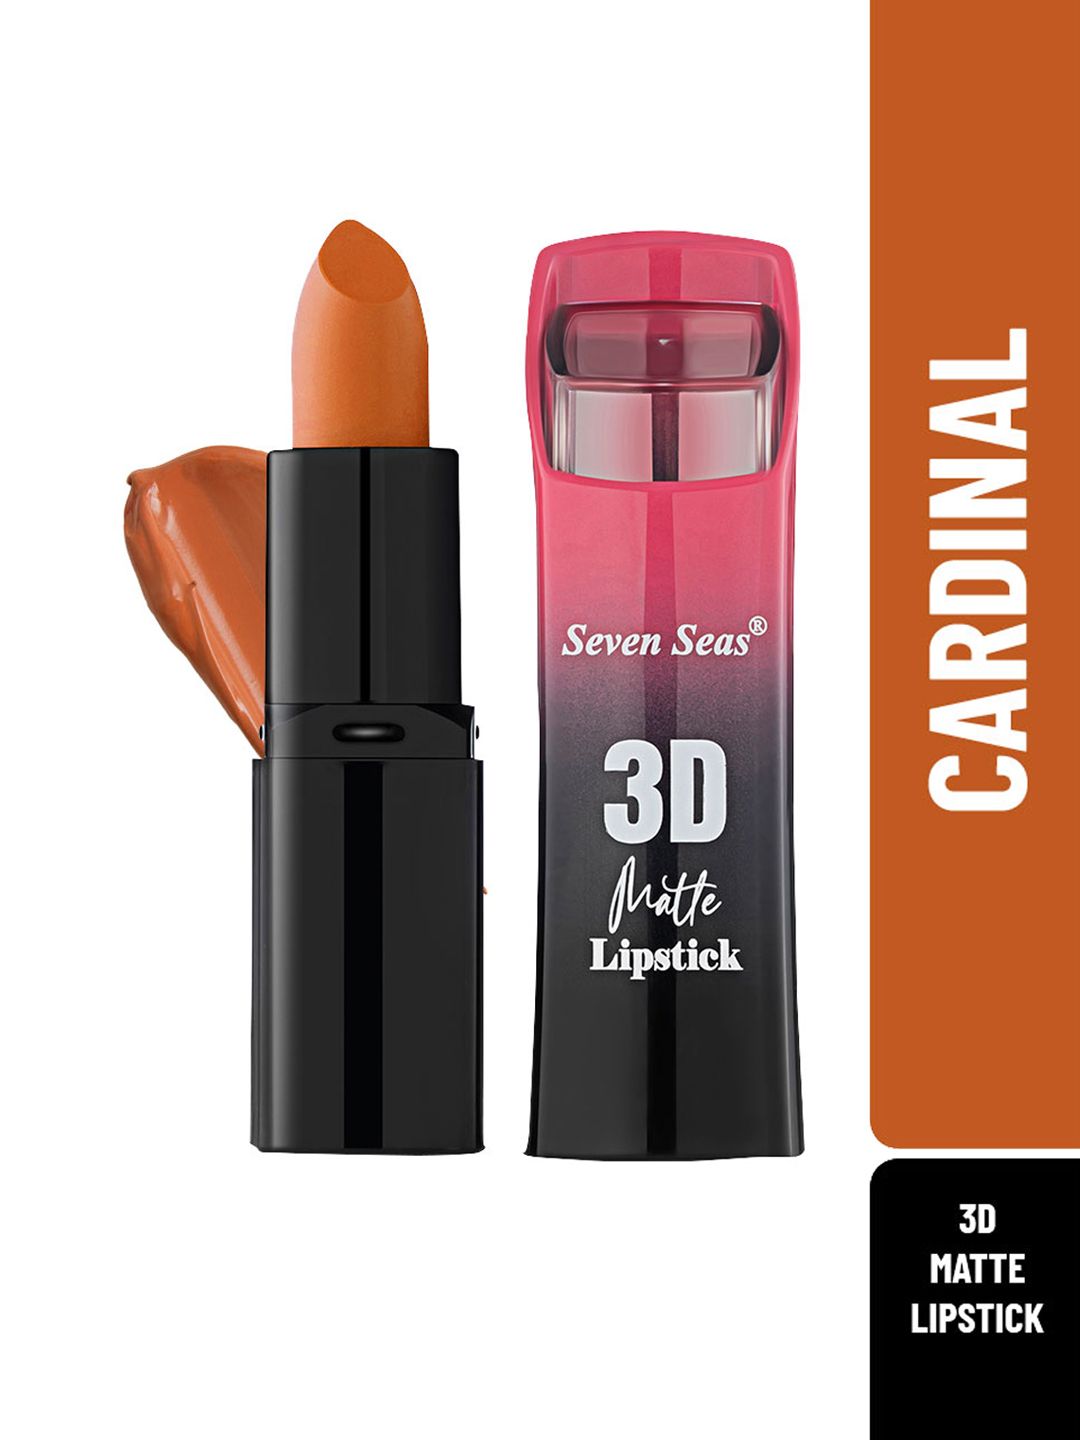 Seven Seas 3D Matte Full Coverage Lipstick - Cardinal Price in India